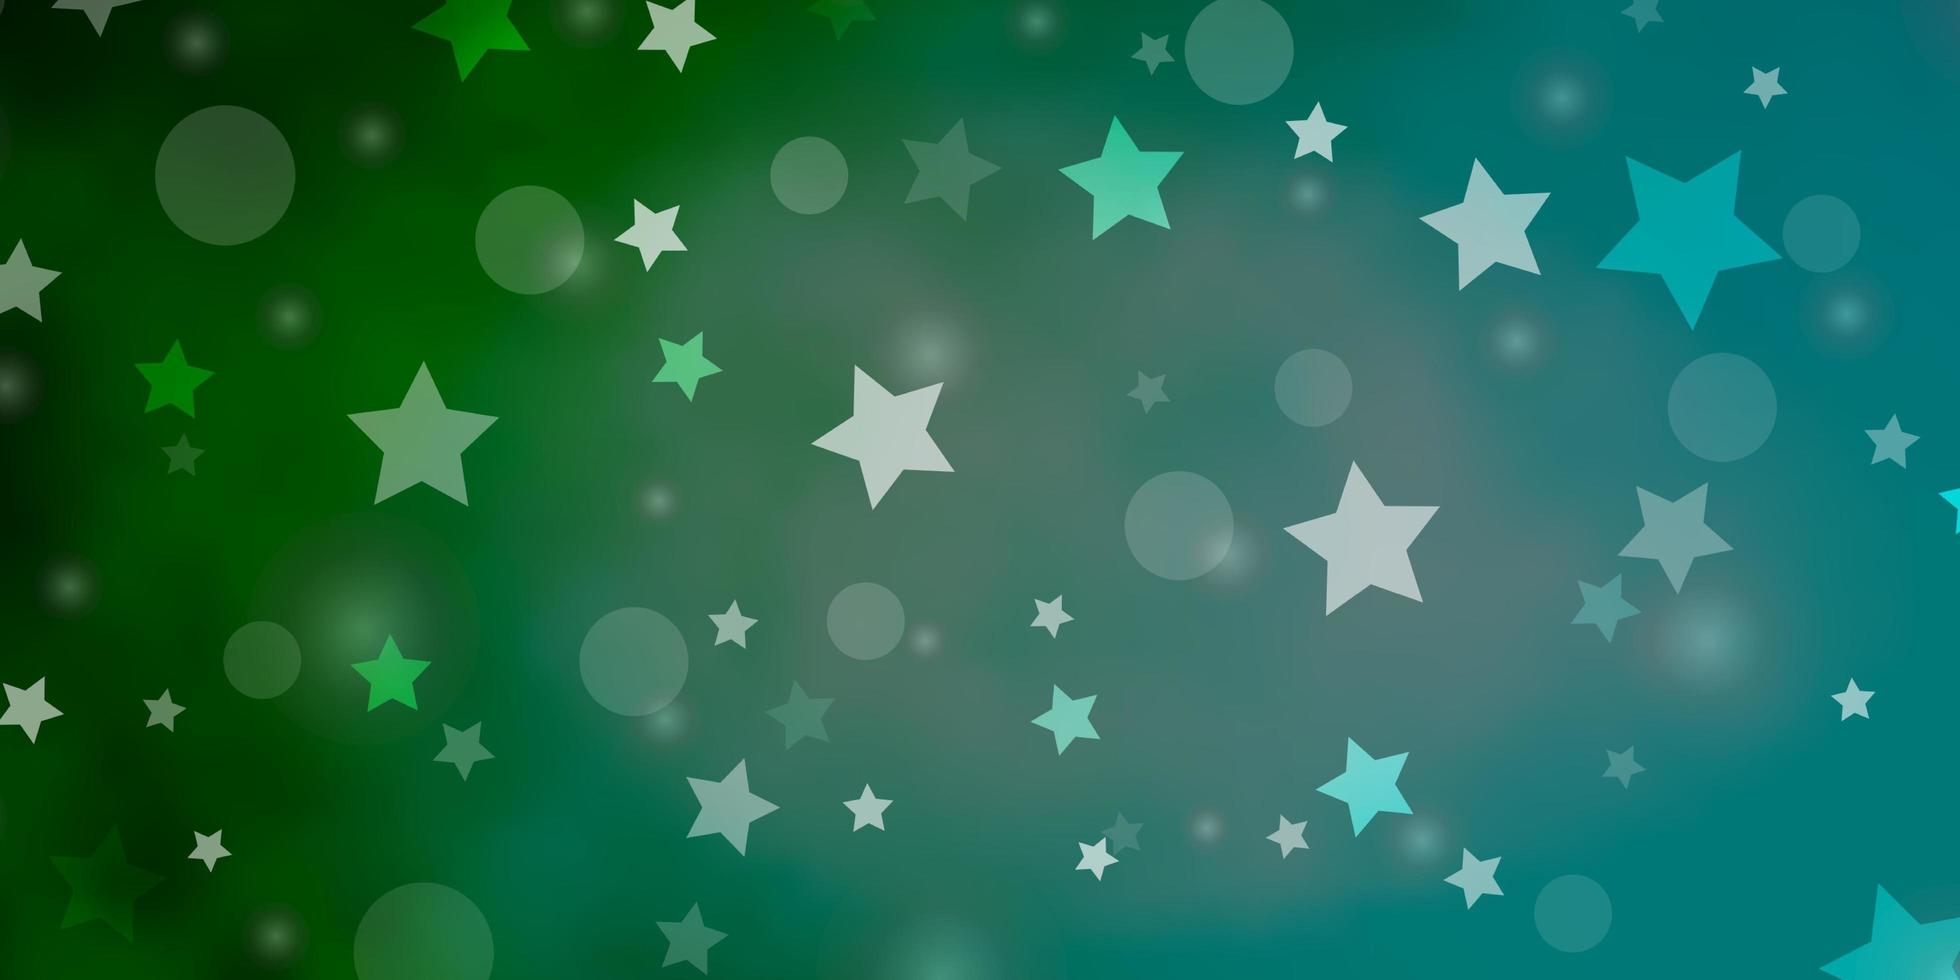 layout de vetor de azul claro e verde com círculos, estrelas.